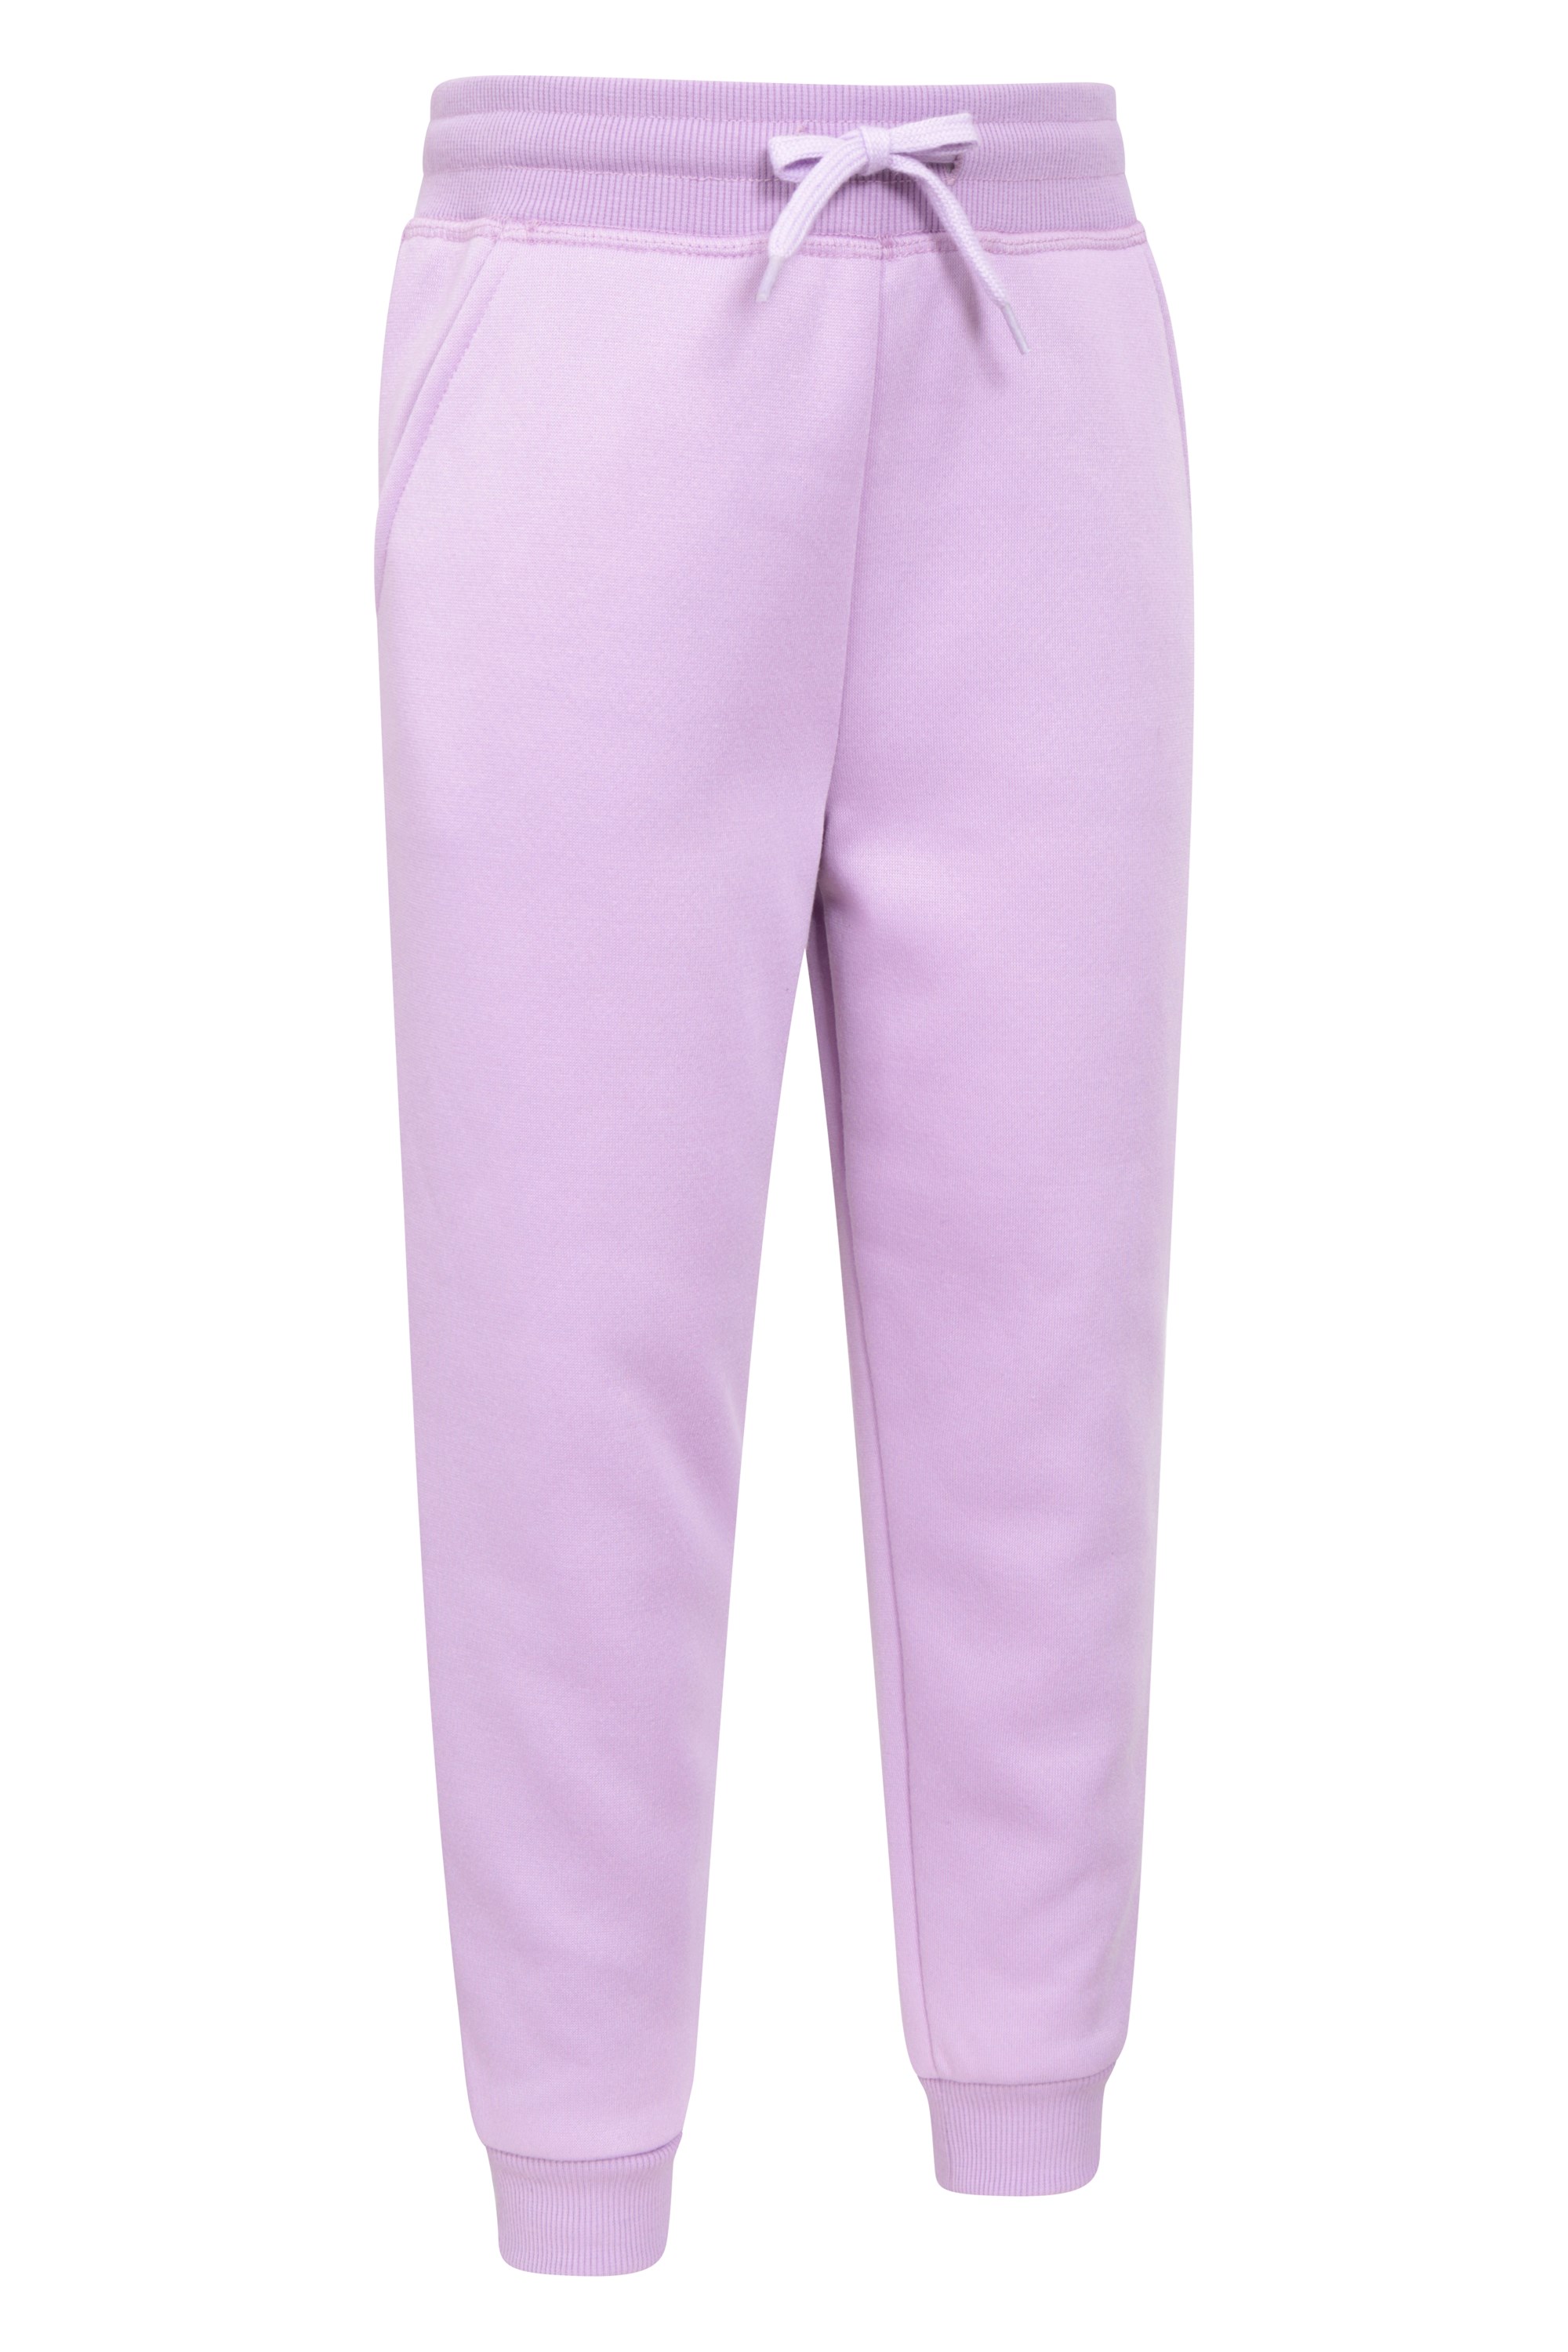 Mountain Warehouse Talus Kids Thermal Pants -Warm Winter Baselayer Pink  2T-3T